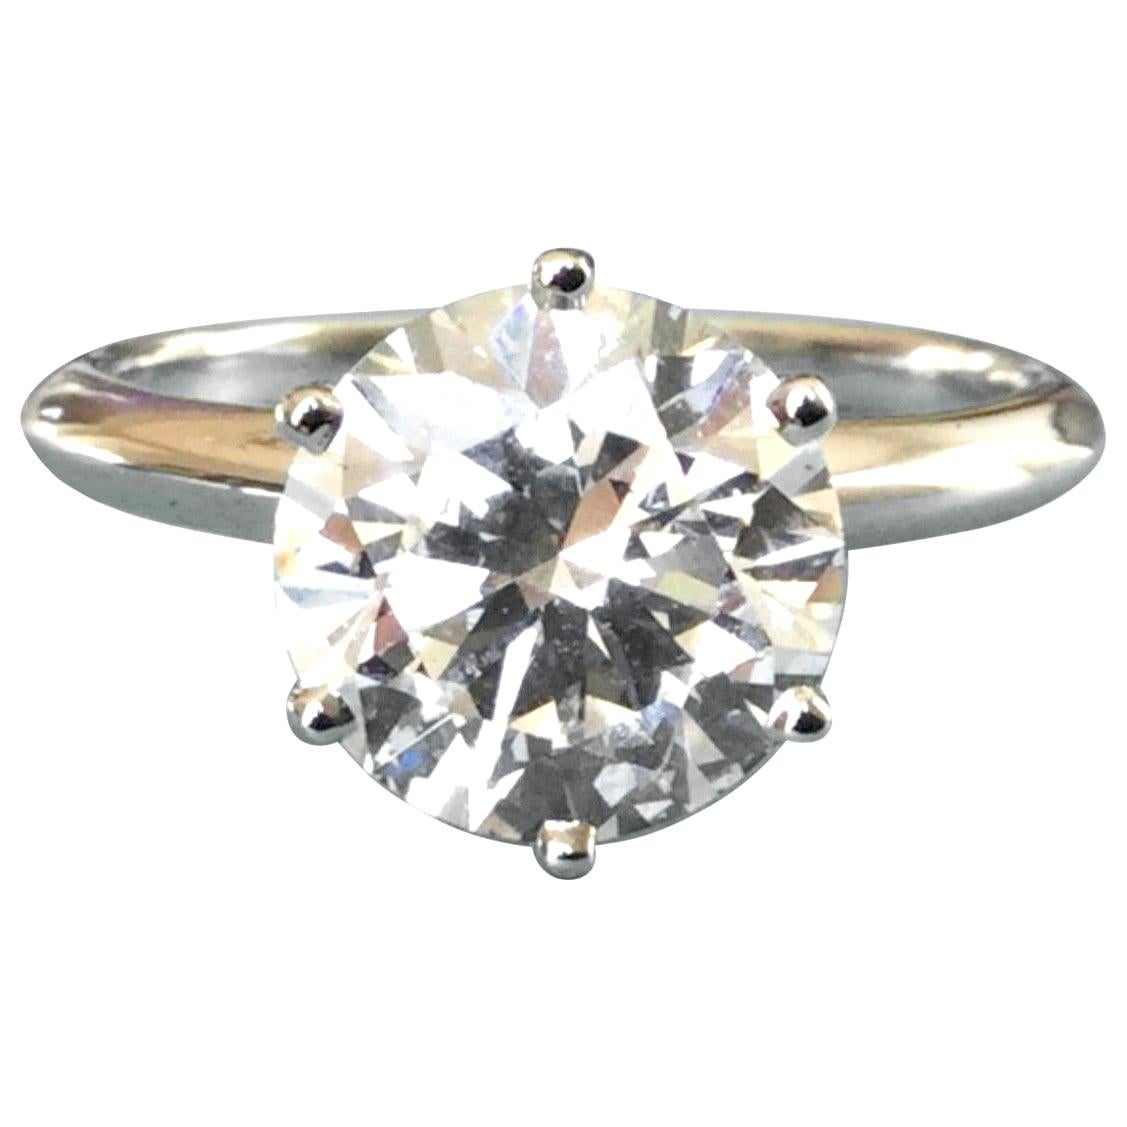 Tiffany & Co. Platinum Diamond .92 Carat Round Ring G VVS2 Triple Excellent Cut For Sale